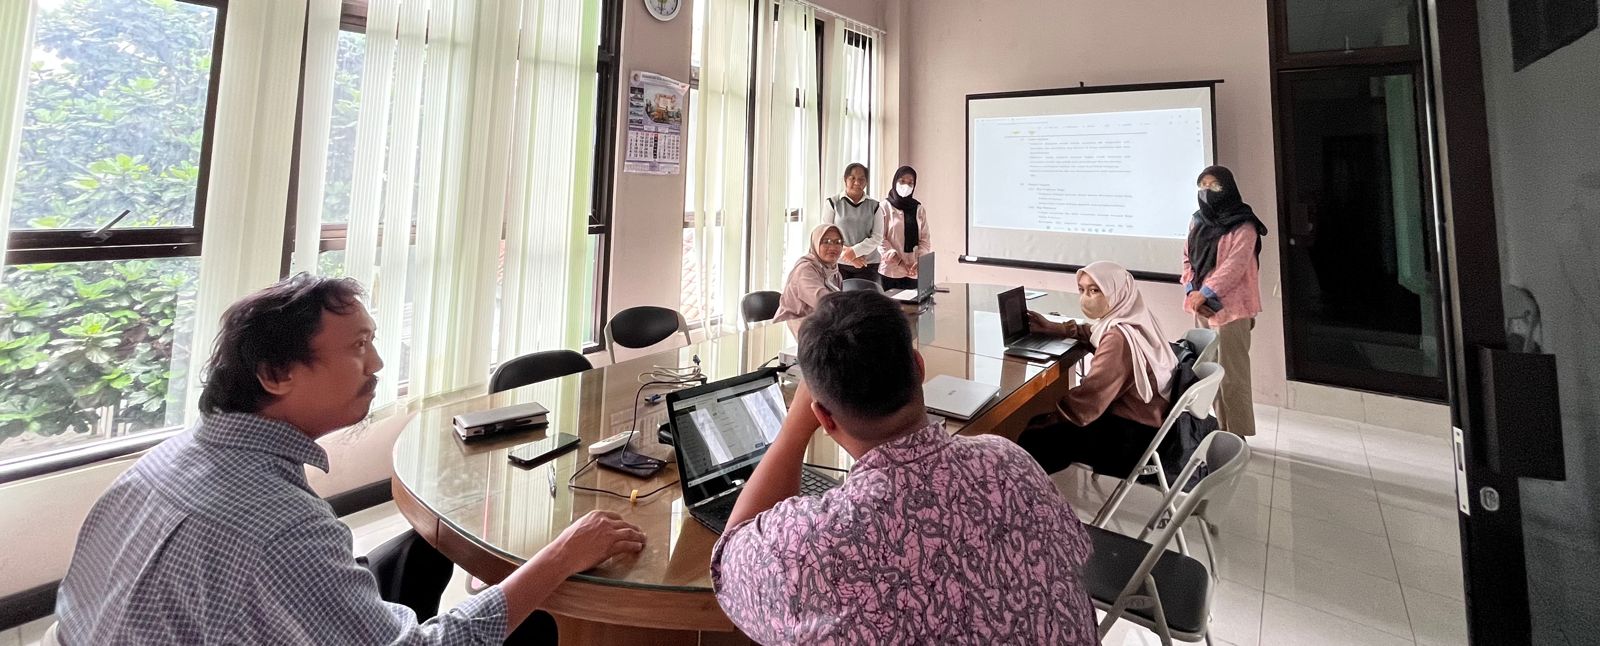 Koordinasi Kerja Praktik MBKM Universitas Pembangunan Nasional “Veteran“ Yogyakarta dalam rangka Pemetaan Pariwisata Kota Yogyakarta berbasis WebGIS